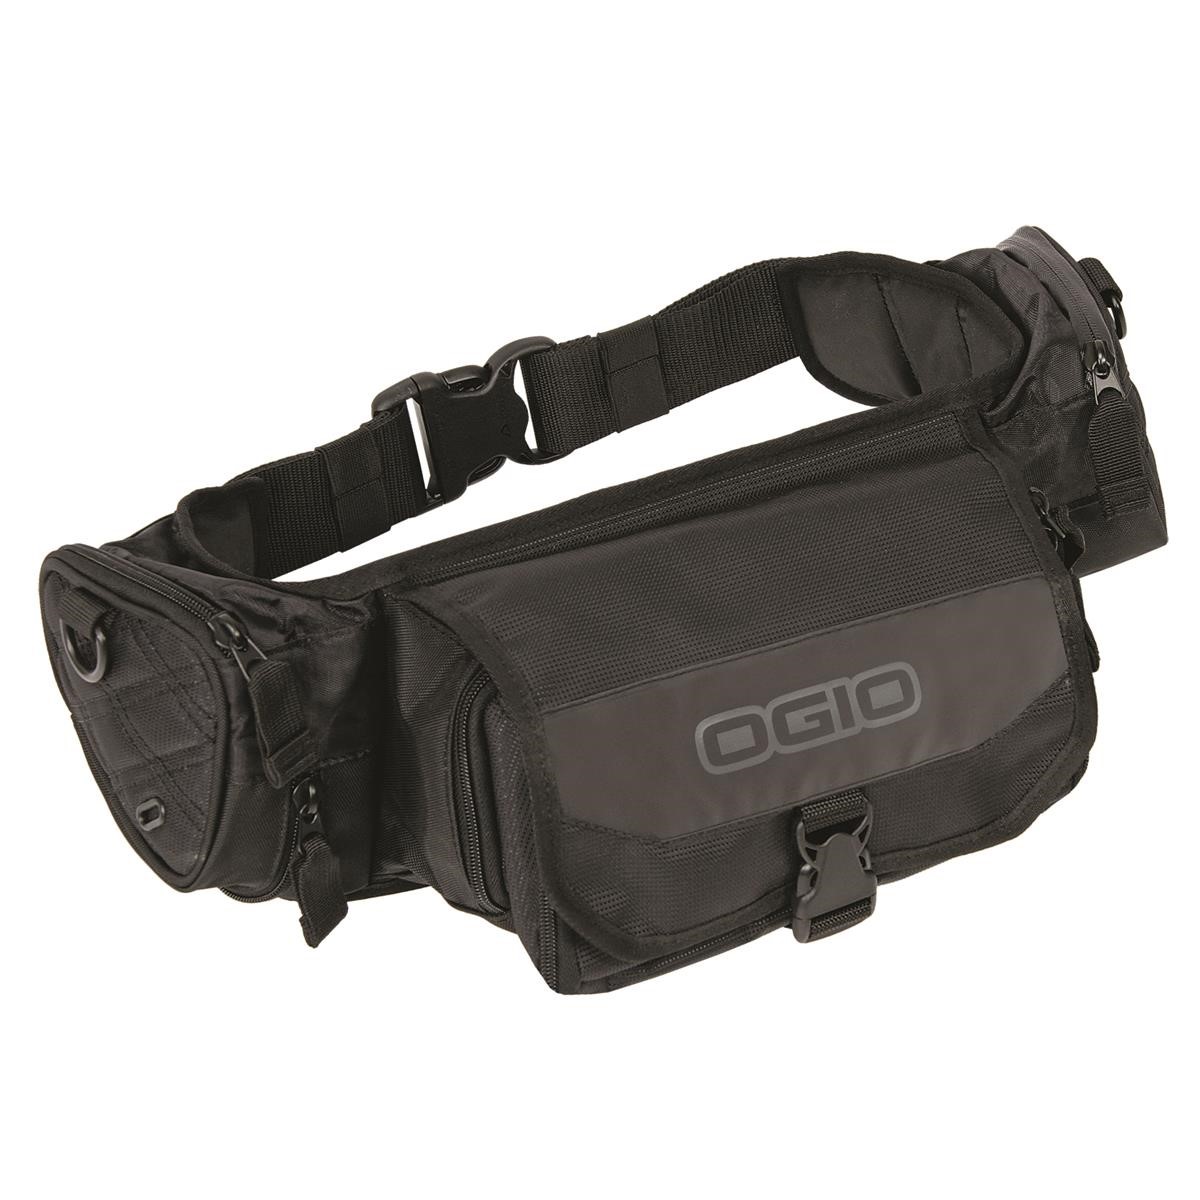 Ogio Sac Banane MX 450 Tool Pack Stealth